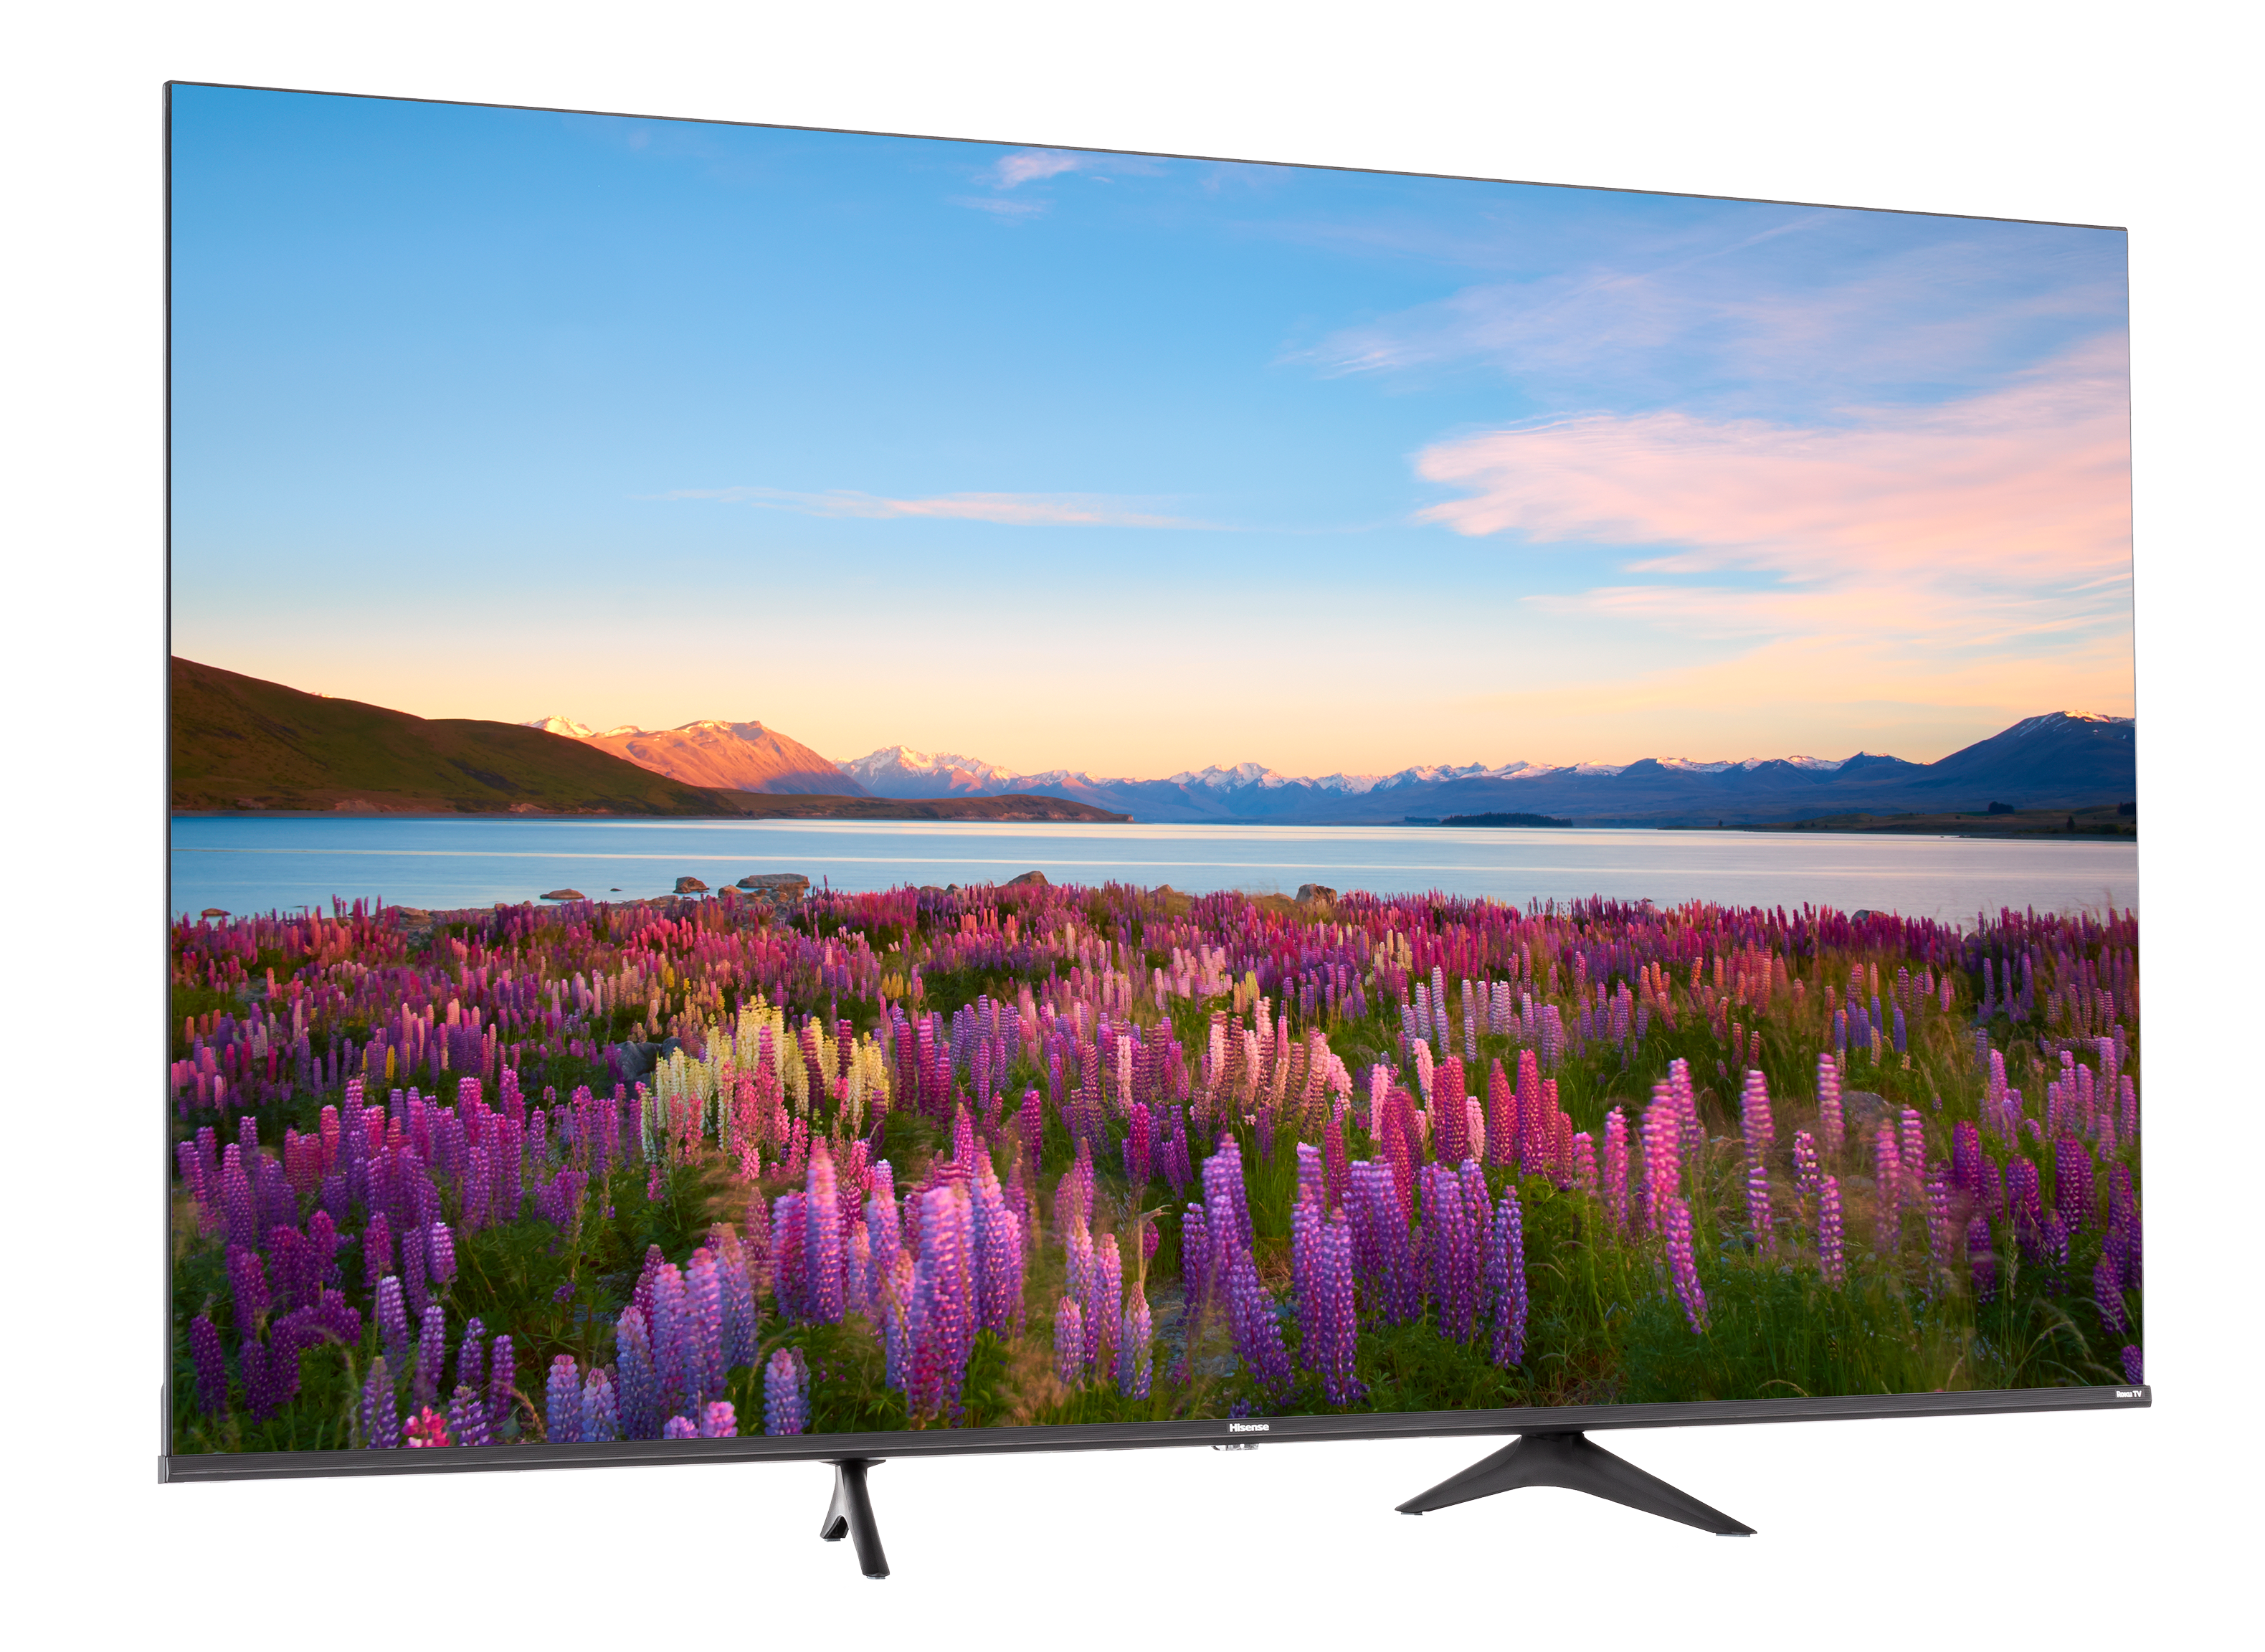 TV HISENSE 65" 65R6E4 LED 4K UHD/ROKU SMART TV/Dolby Vision HDR + HDR10/Alexa /Google Assistant - 65R6E4